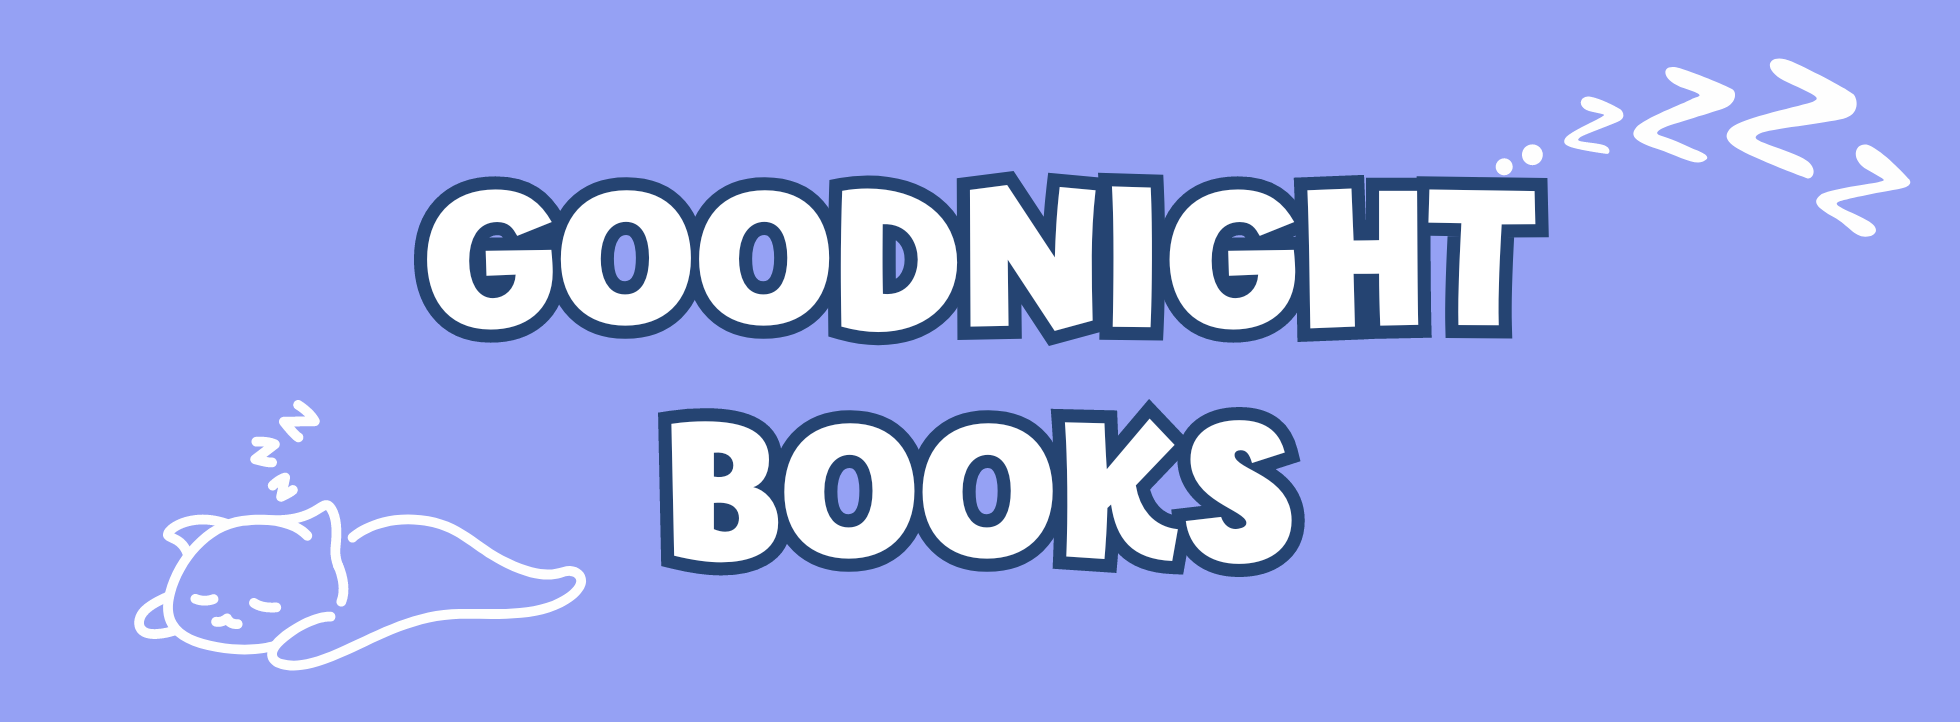 Goodnight Books